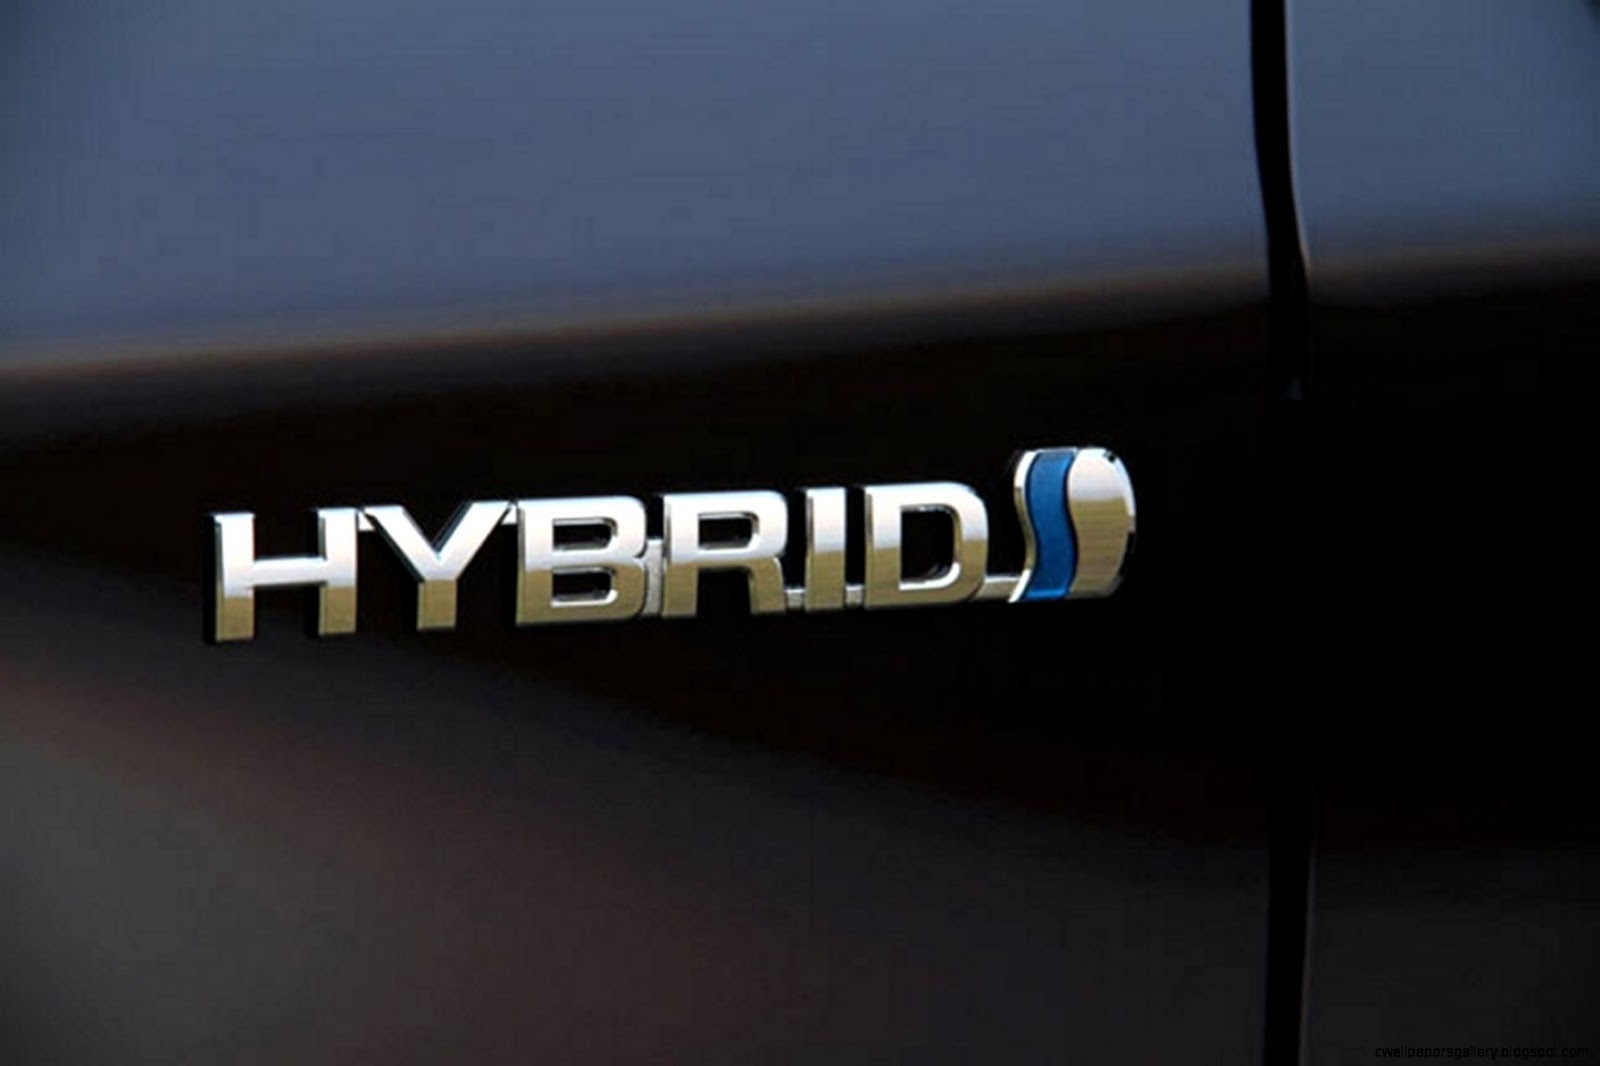 Hybrid 4 signature. Toyota Prius Hybrid лого. Toyota Hybrid шильдик. Значок Тойота гибрид. Toyota Prius шильдик.